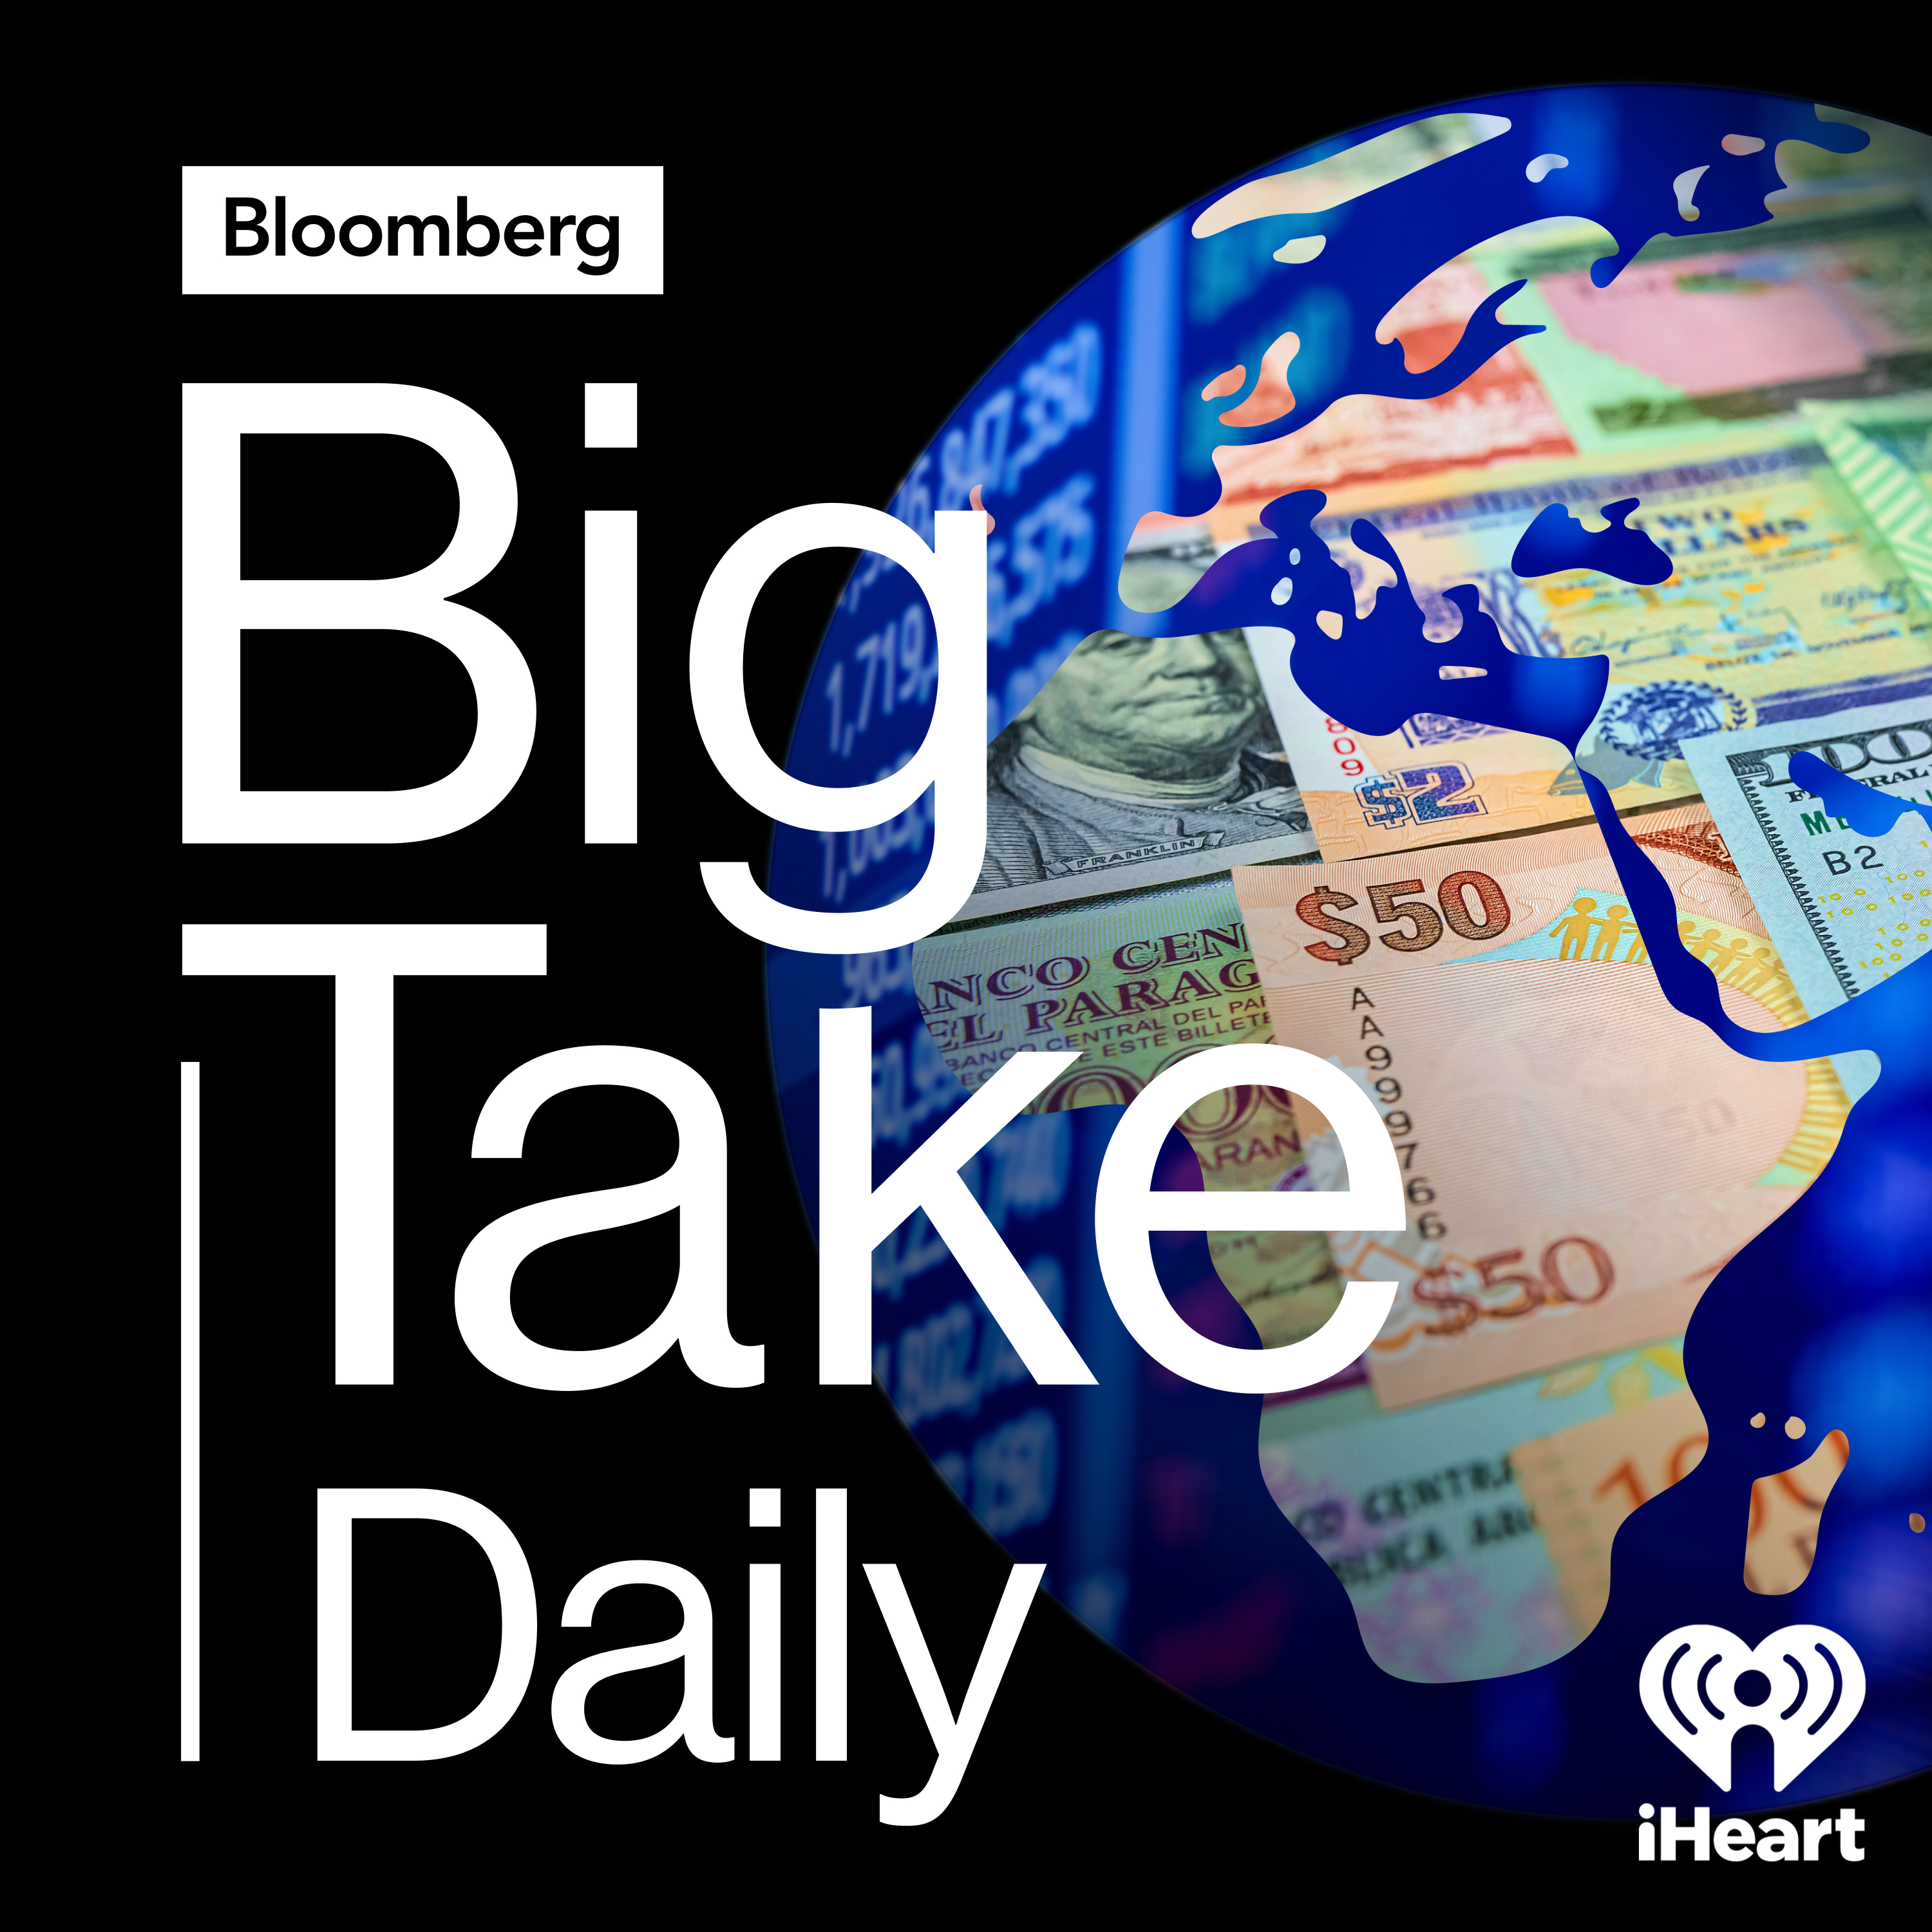 ‘Bluey’: A Blue Heeler Worth $2 Billion With an Uncertain Future